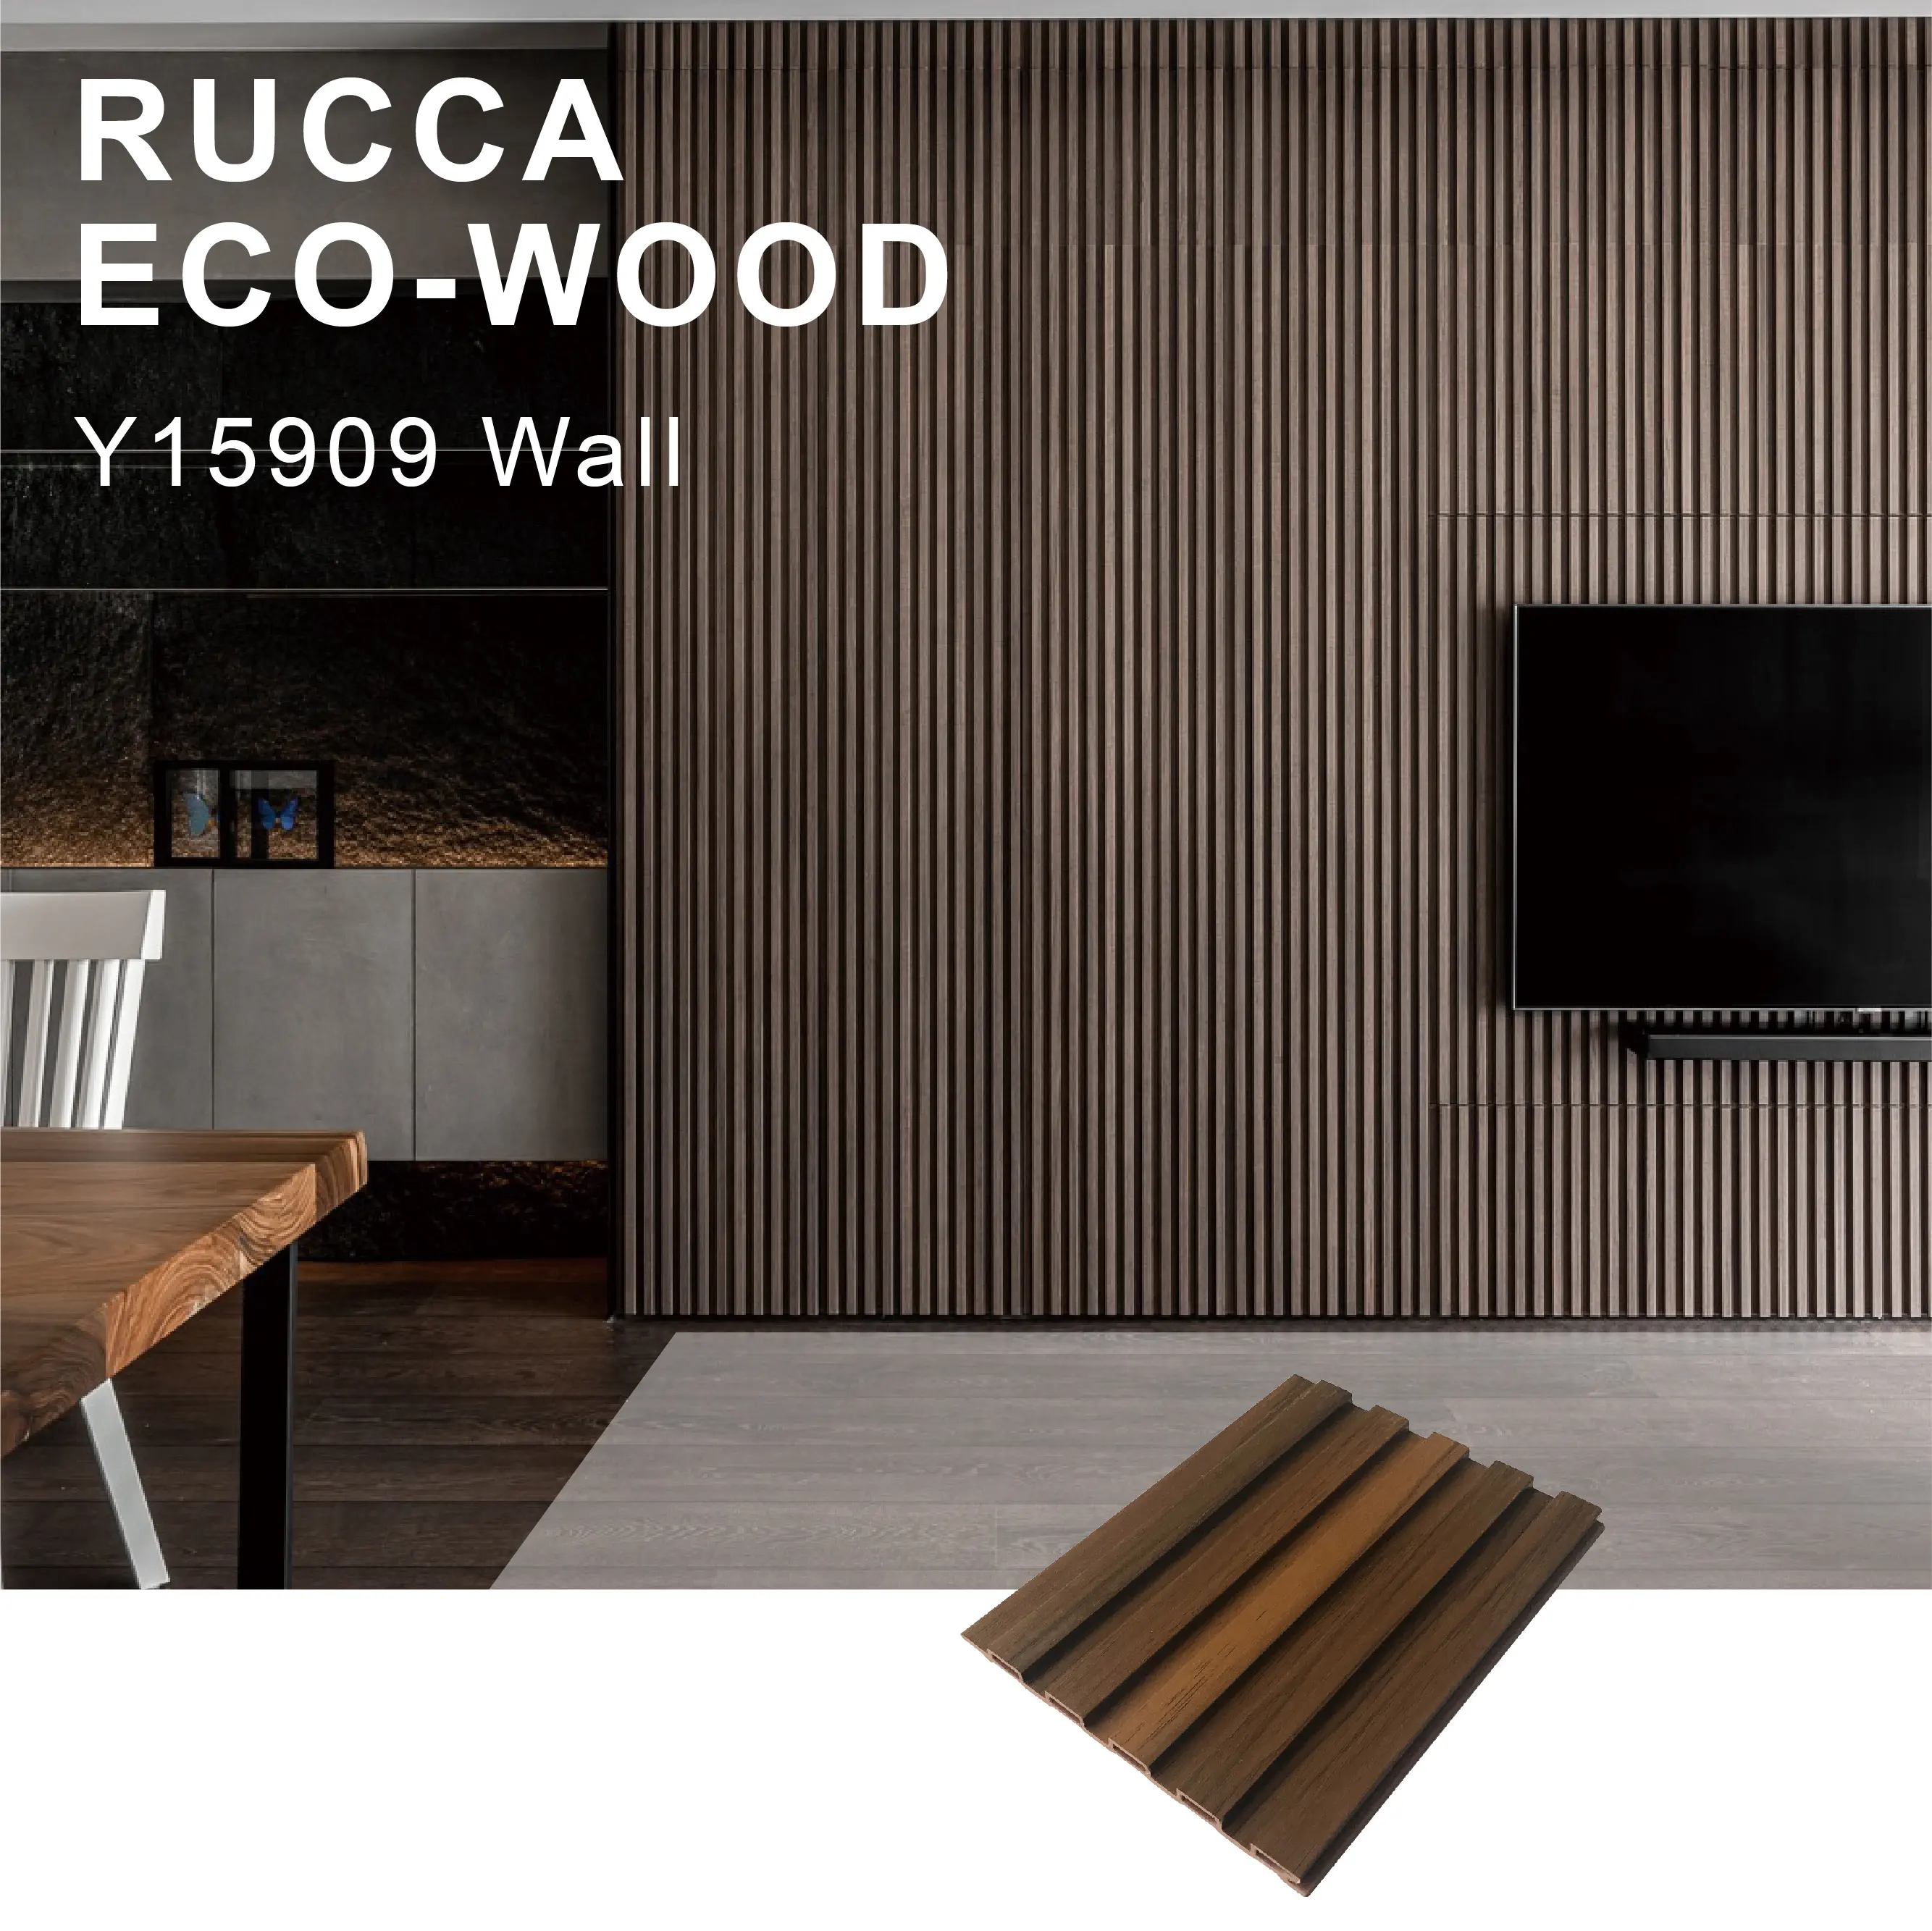 Rucca WPC/PVC مرّكب من الخشب والبلاستيك صفح 159*09 مللي متر لوحات الحائط للداخلية الداخلية الديكور الواجهة